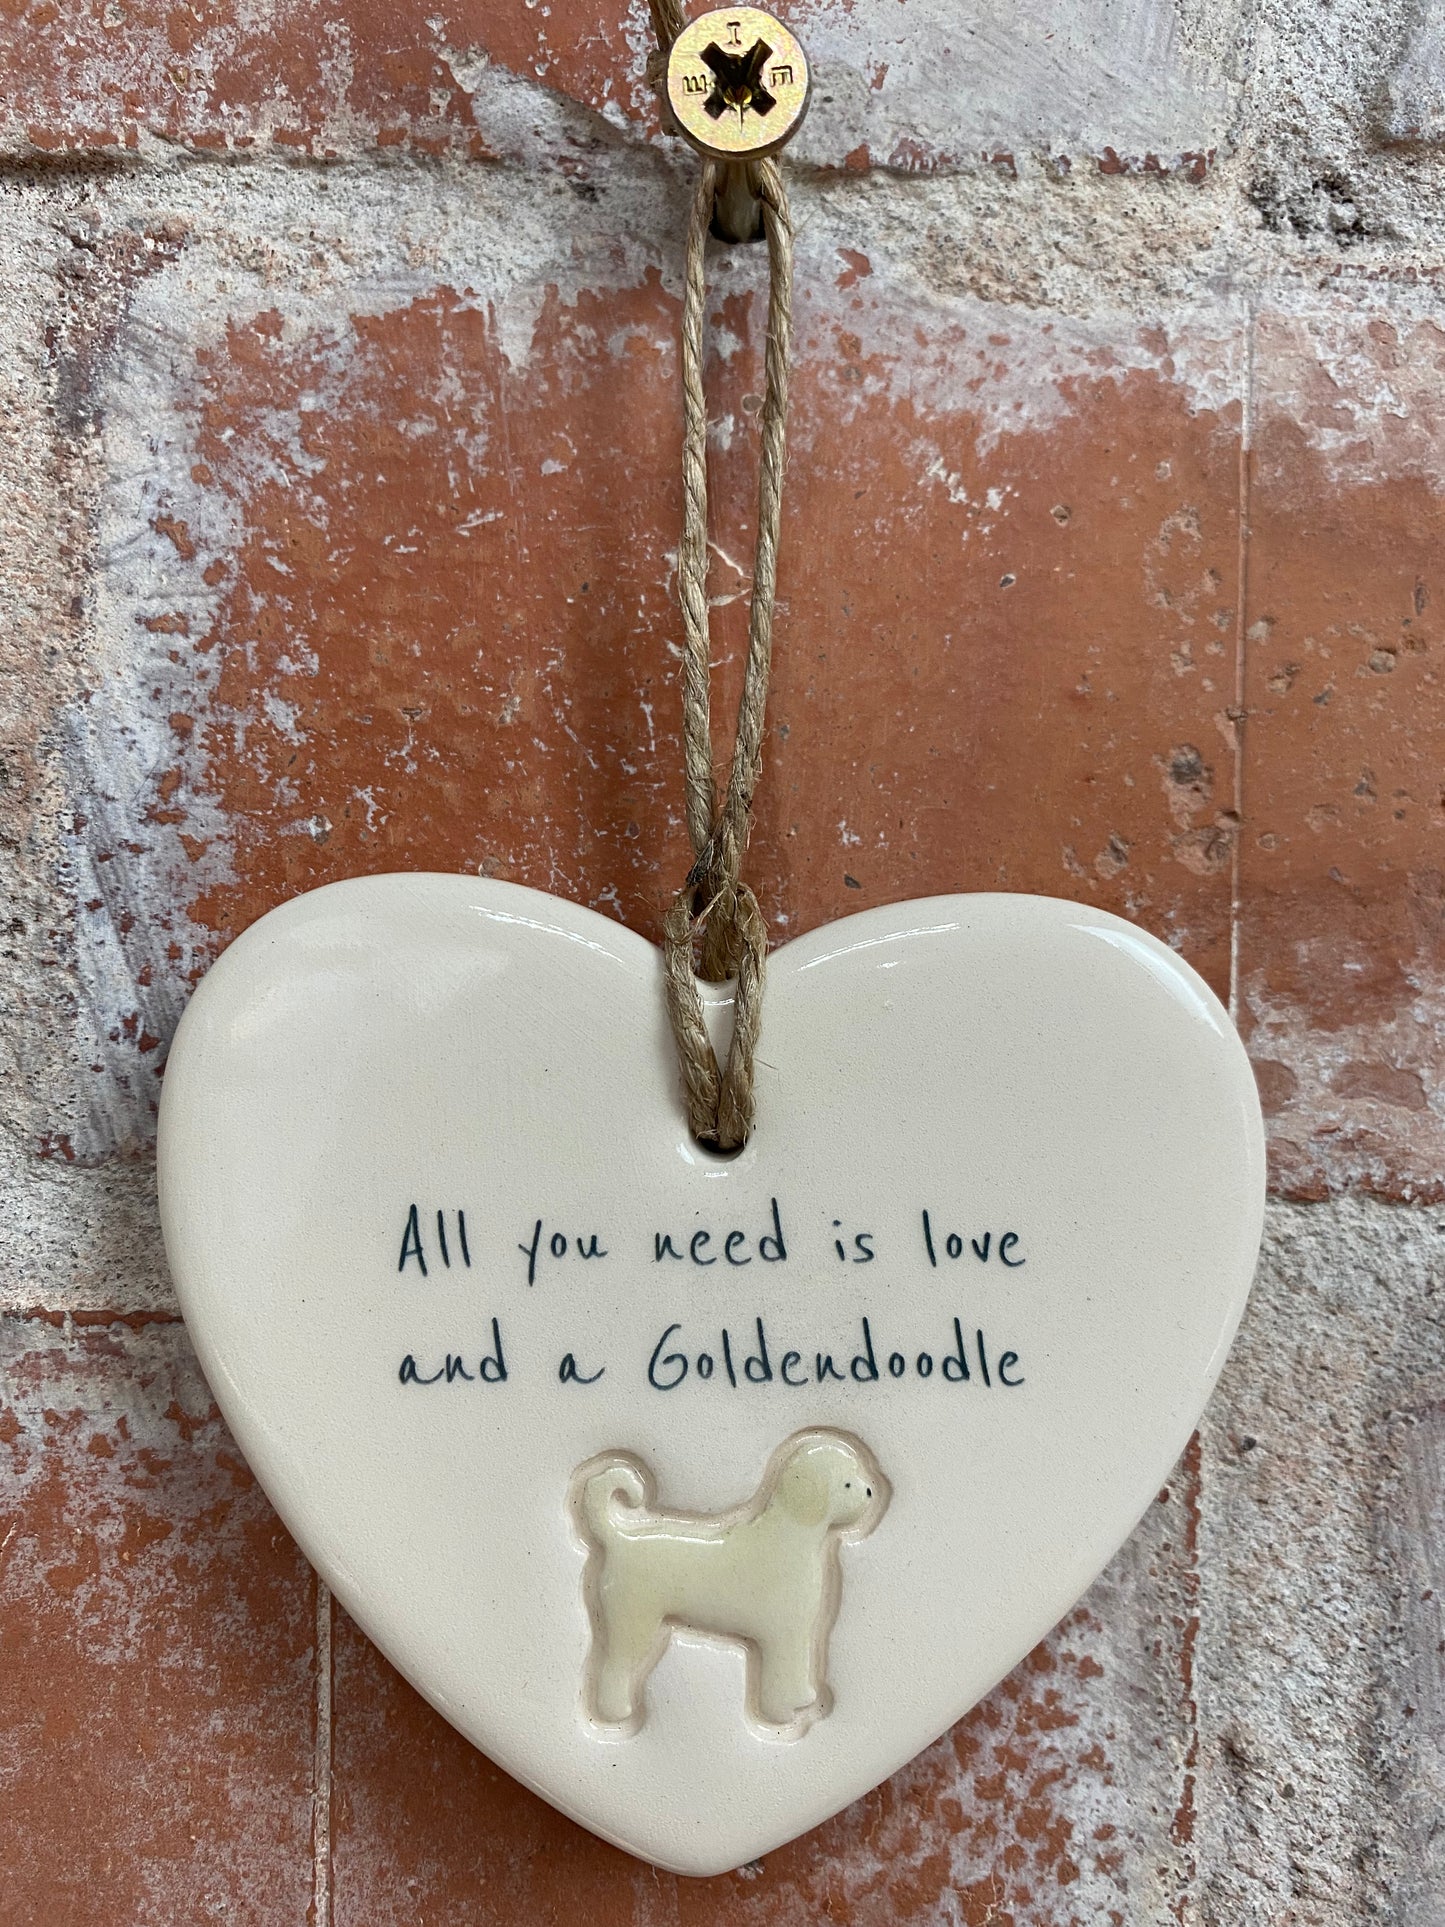 Goldendoodle heart